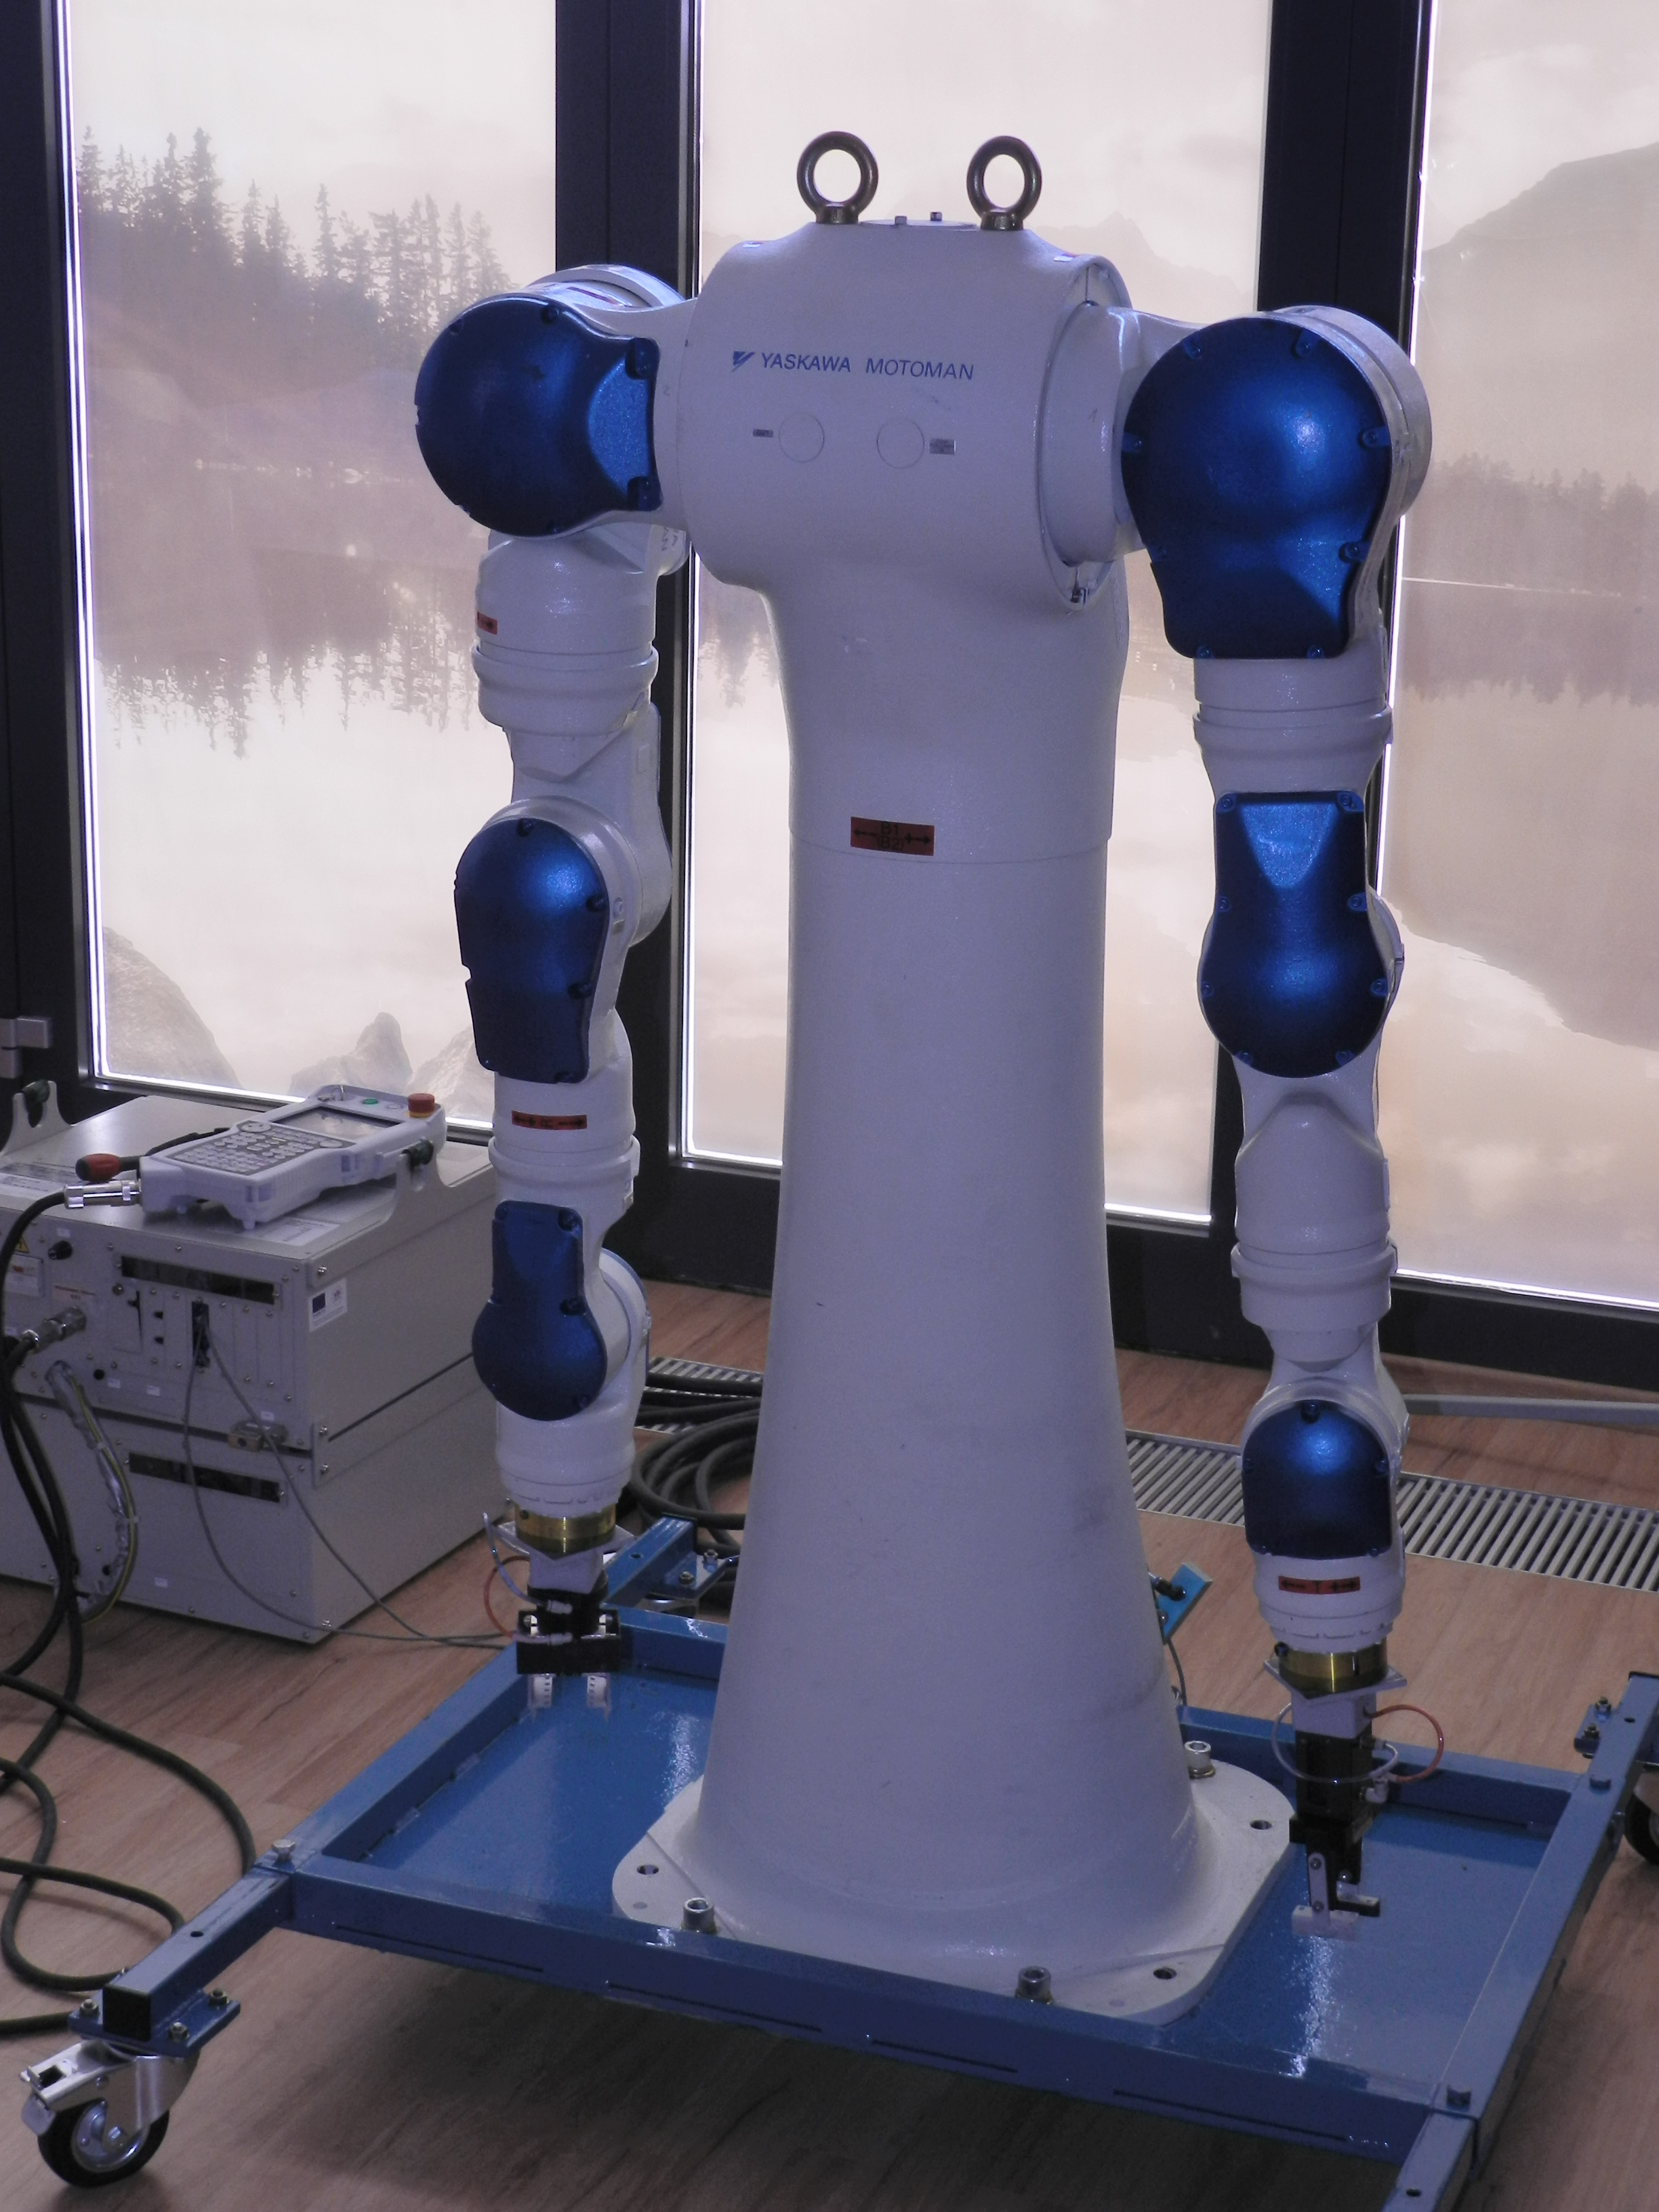 Obr. 2 Dvojramenný robot Yaskawa Motoman